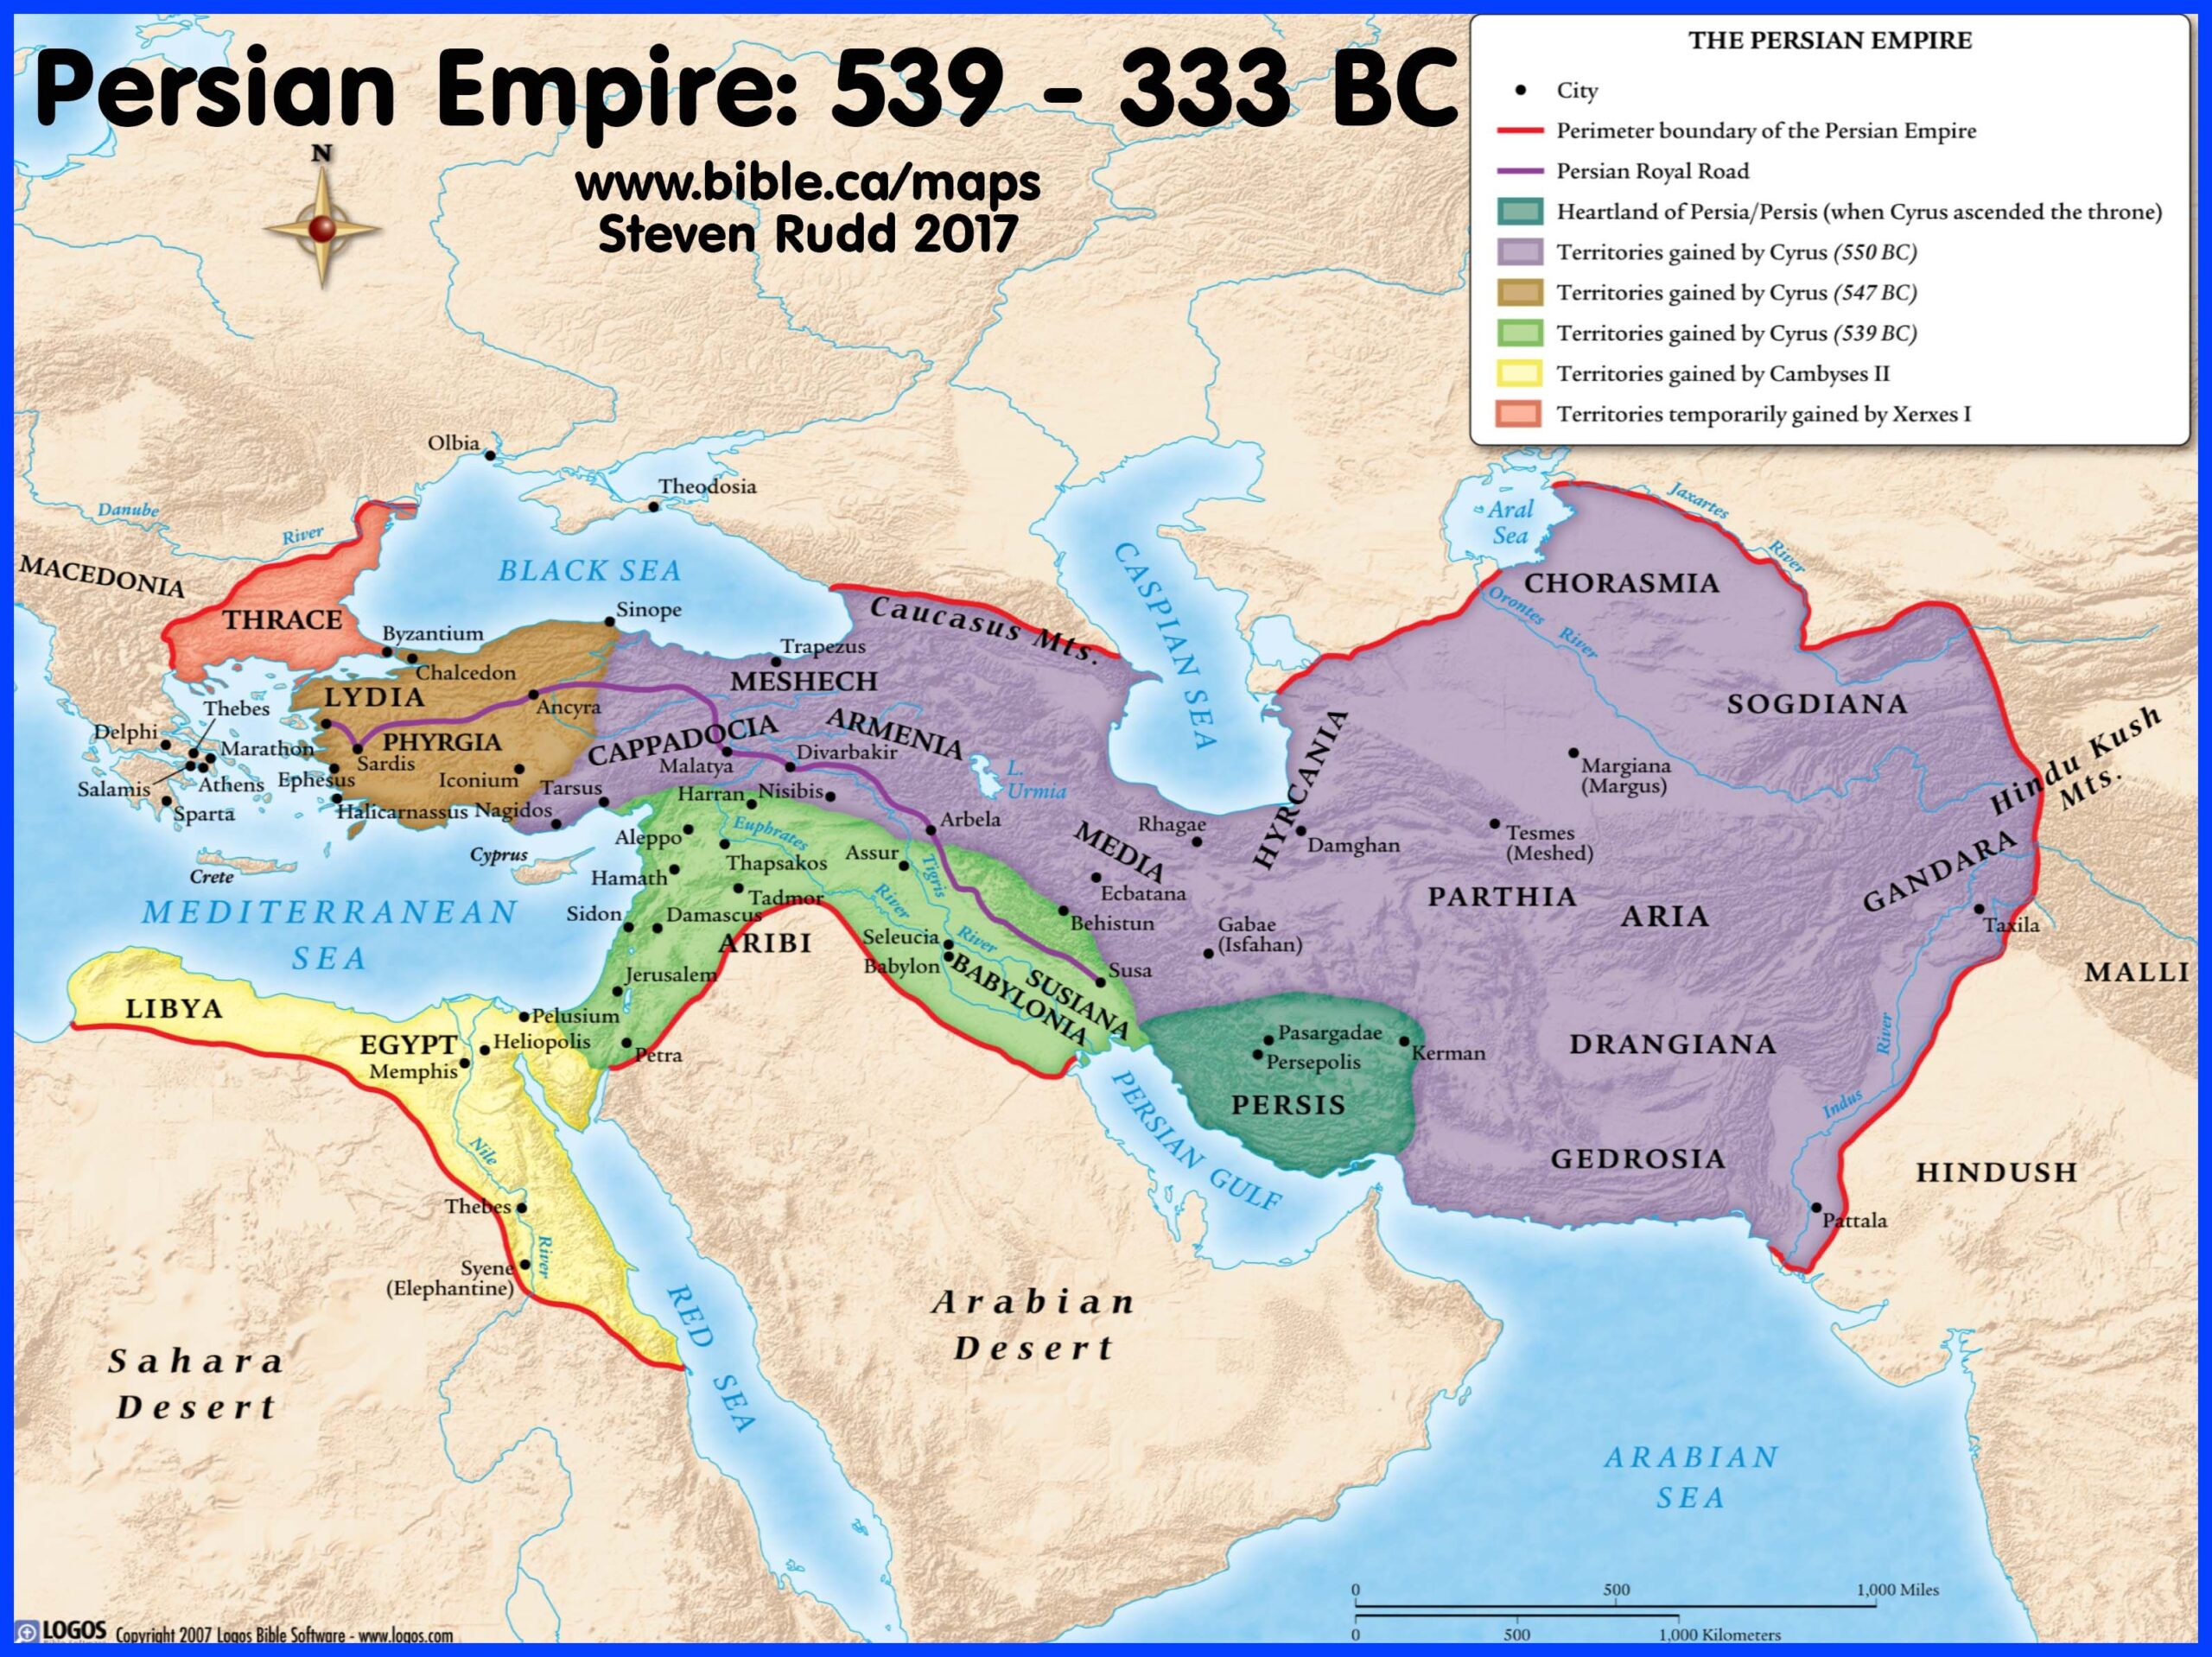 Dynasty XVII: Egypt Under Persian Occuption